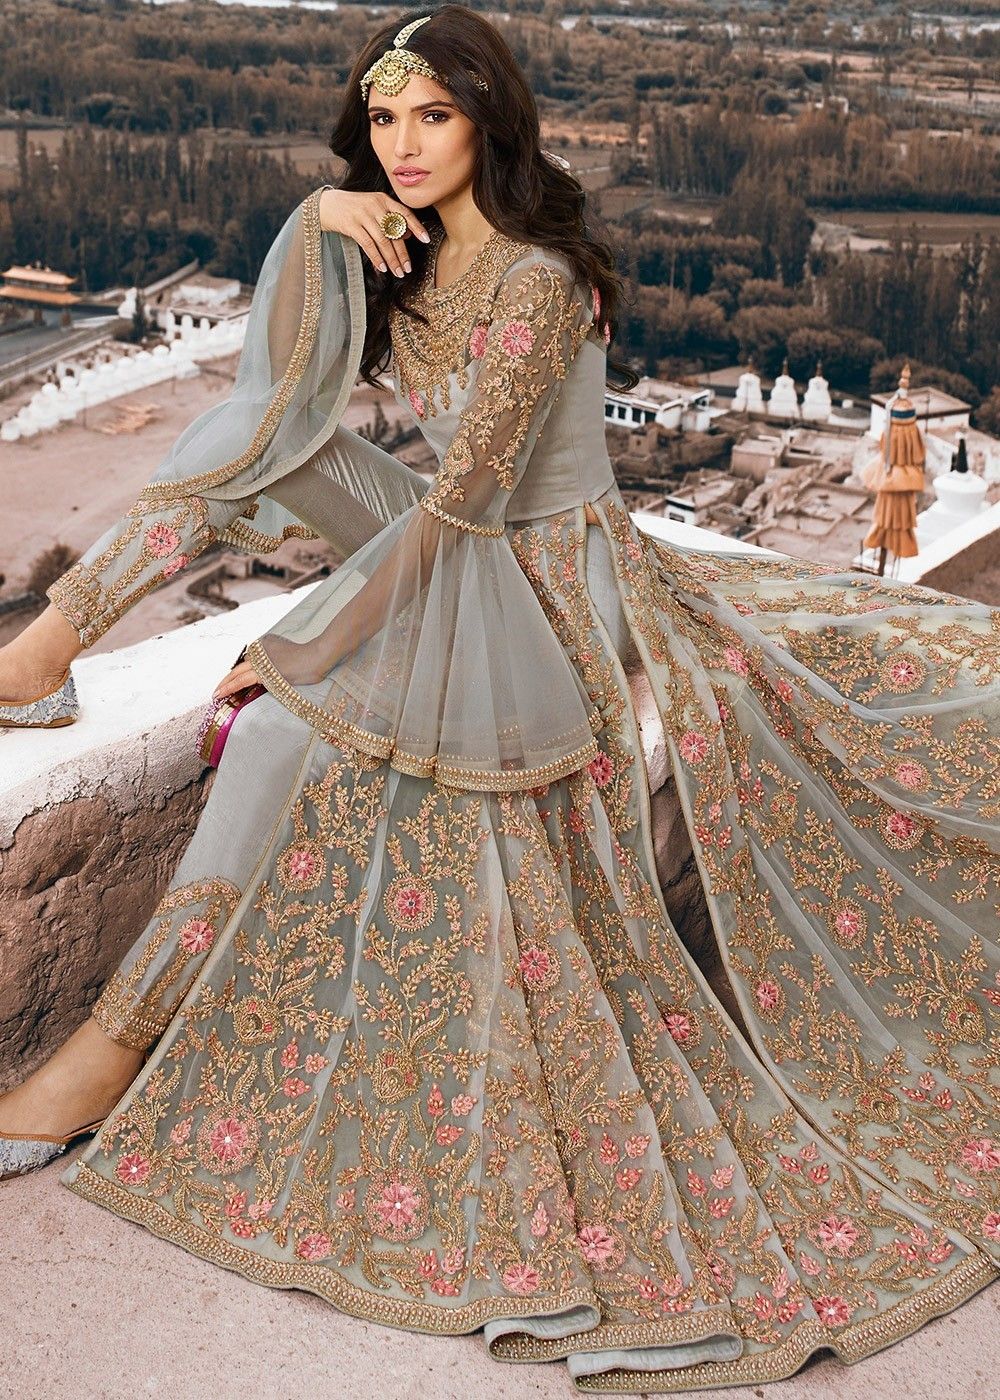 Garba Kedia Navratri dhingli fashion Top & pant set Gujrati dandia choli S  to XL | eBay